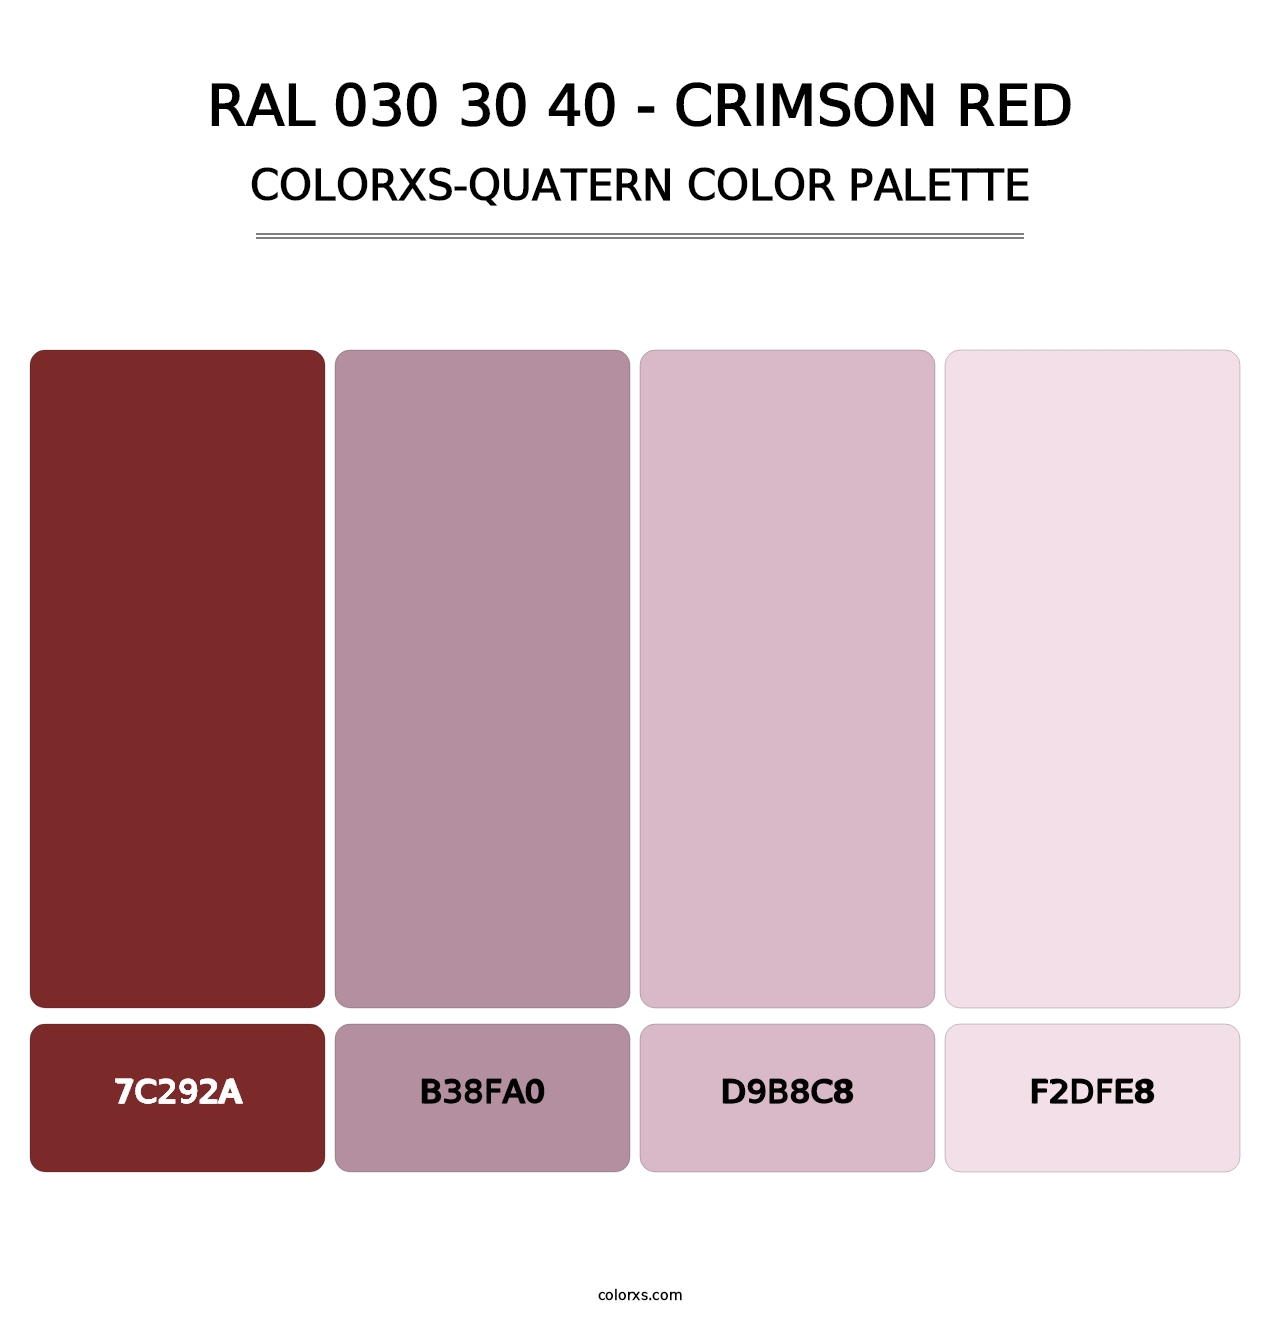 RAL 030 30 40 - Crimson Red - Colorxs Quatern Palette